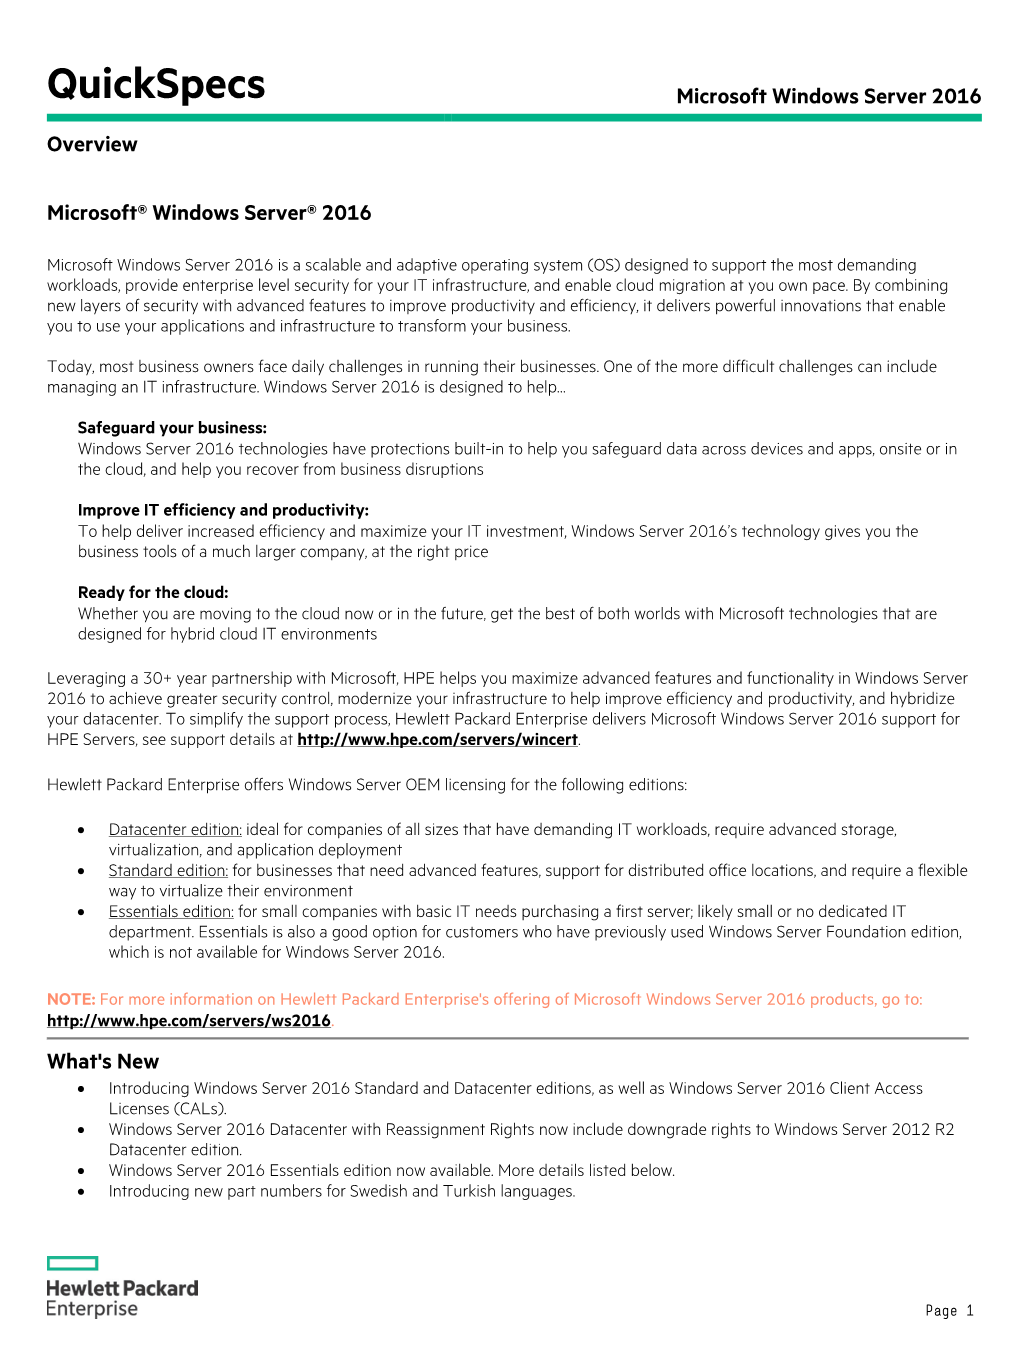 Microsoft Windows Server 2016 Overview